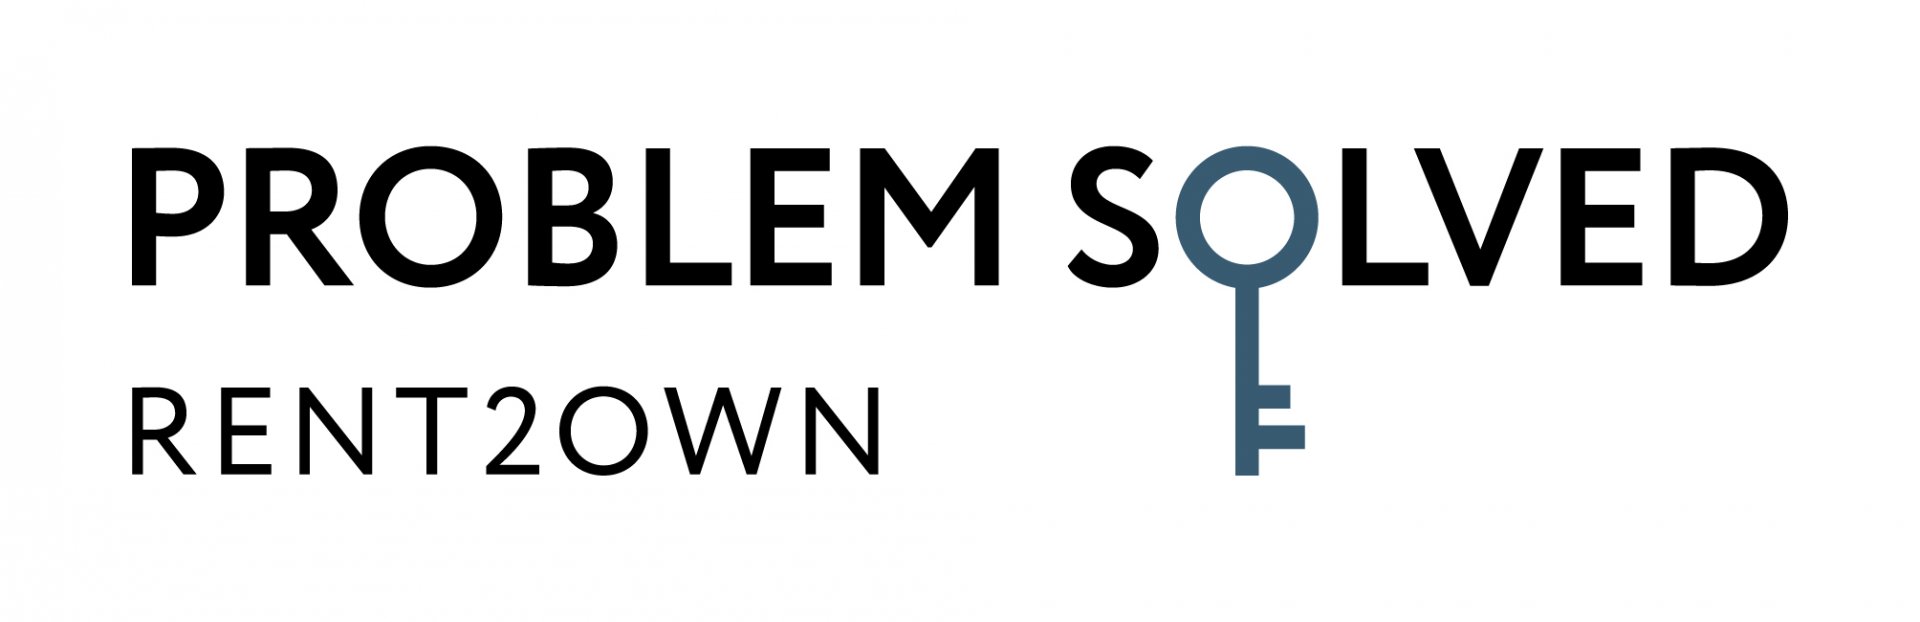 Problem Solved Rent 2 Own logo